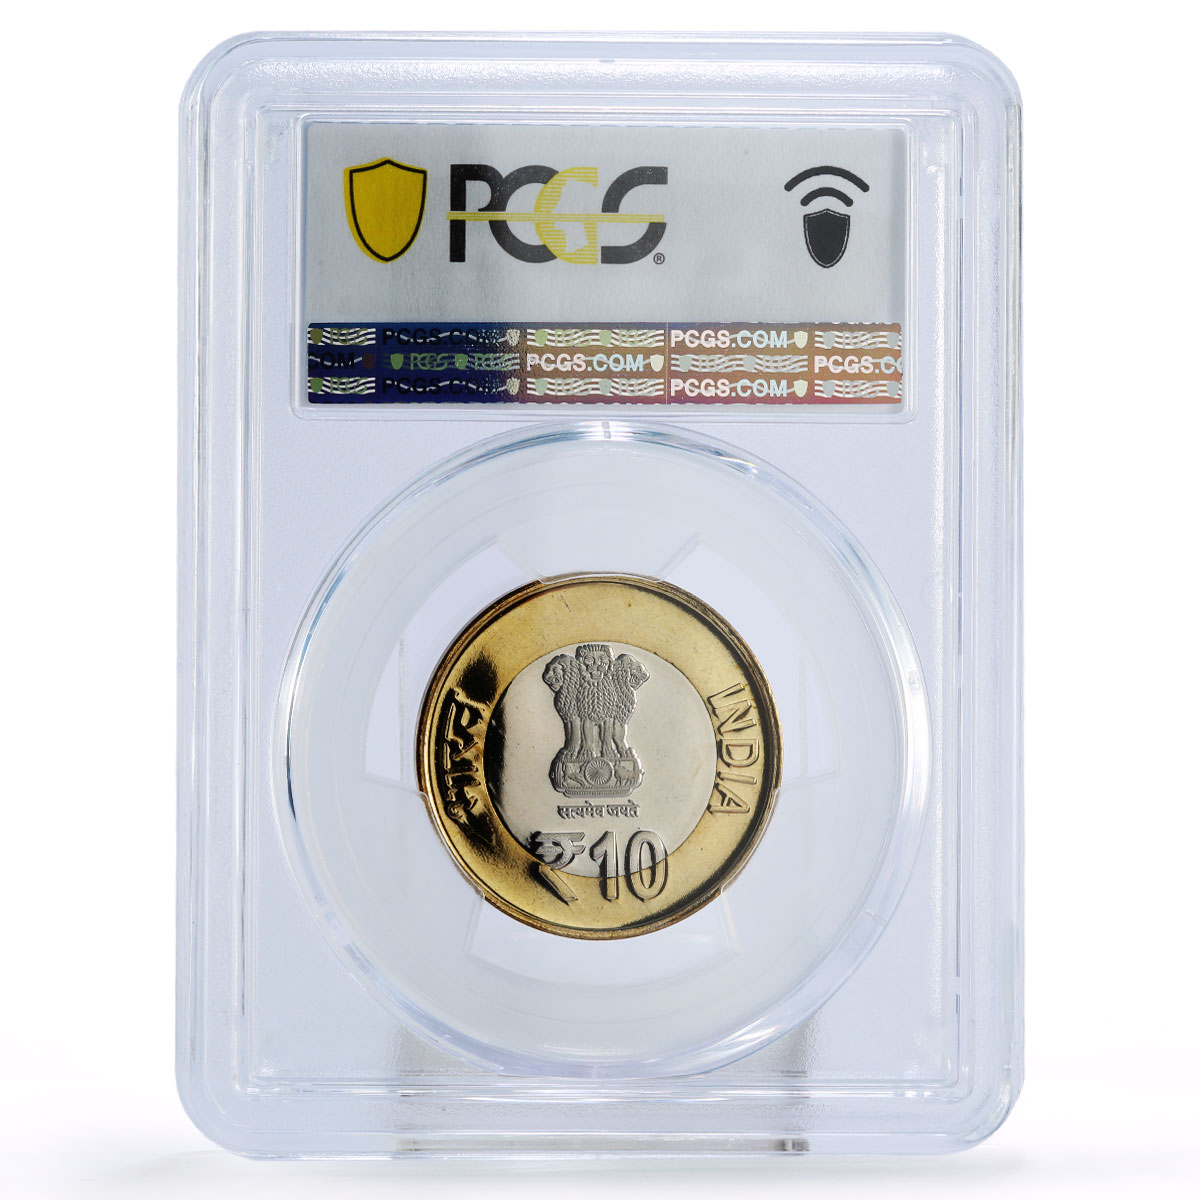 India 10 rupees Shri Jagannath Nabakalebara PR67 PCGS CuNi coin 2015